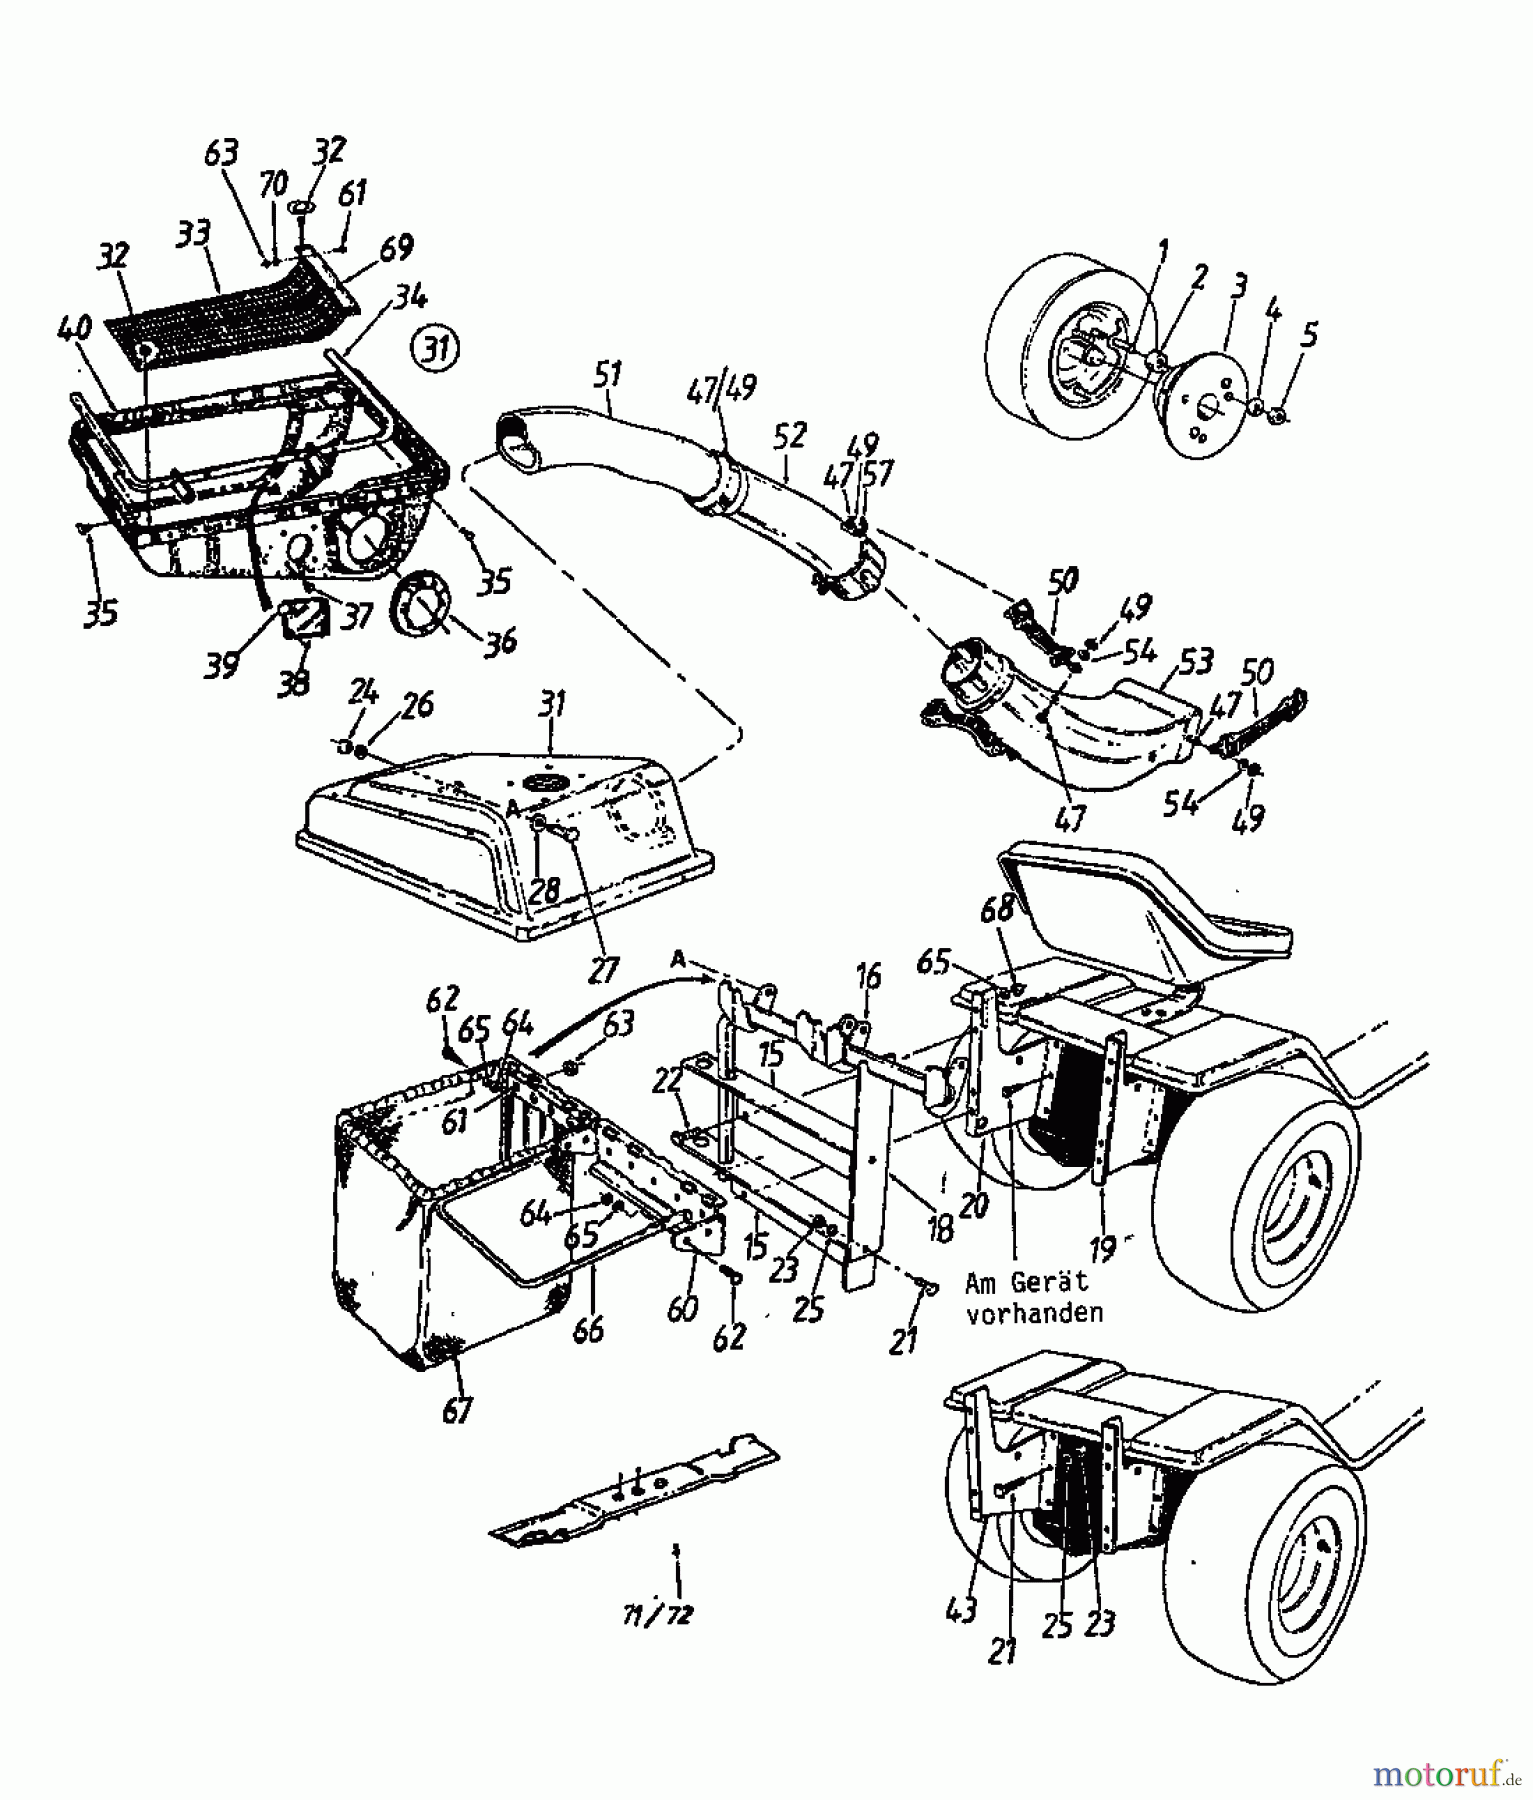  MTD Accessories Accessories garden and lawn tractors Grass catcher for 400 series 190-0640  (1988) Basic machine